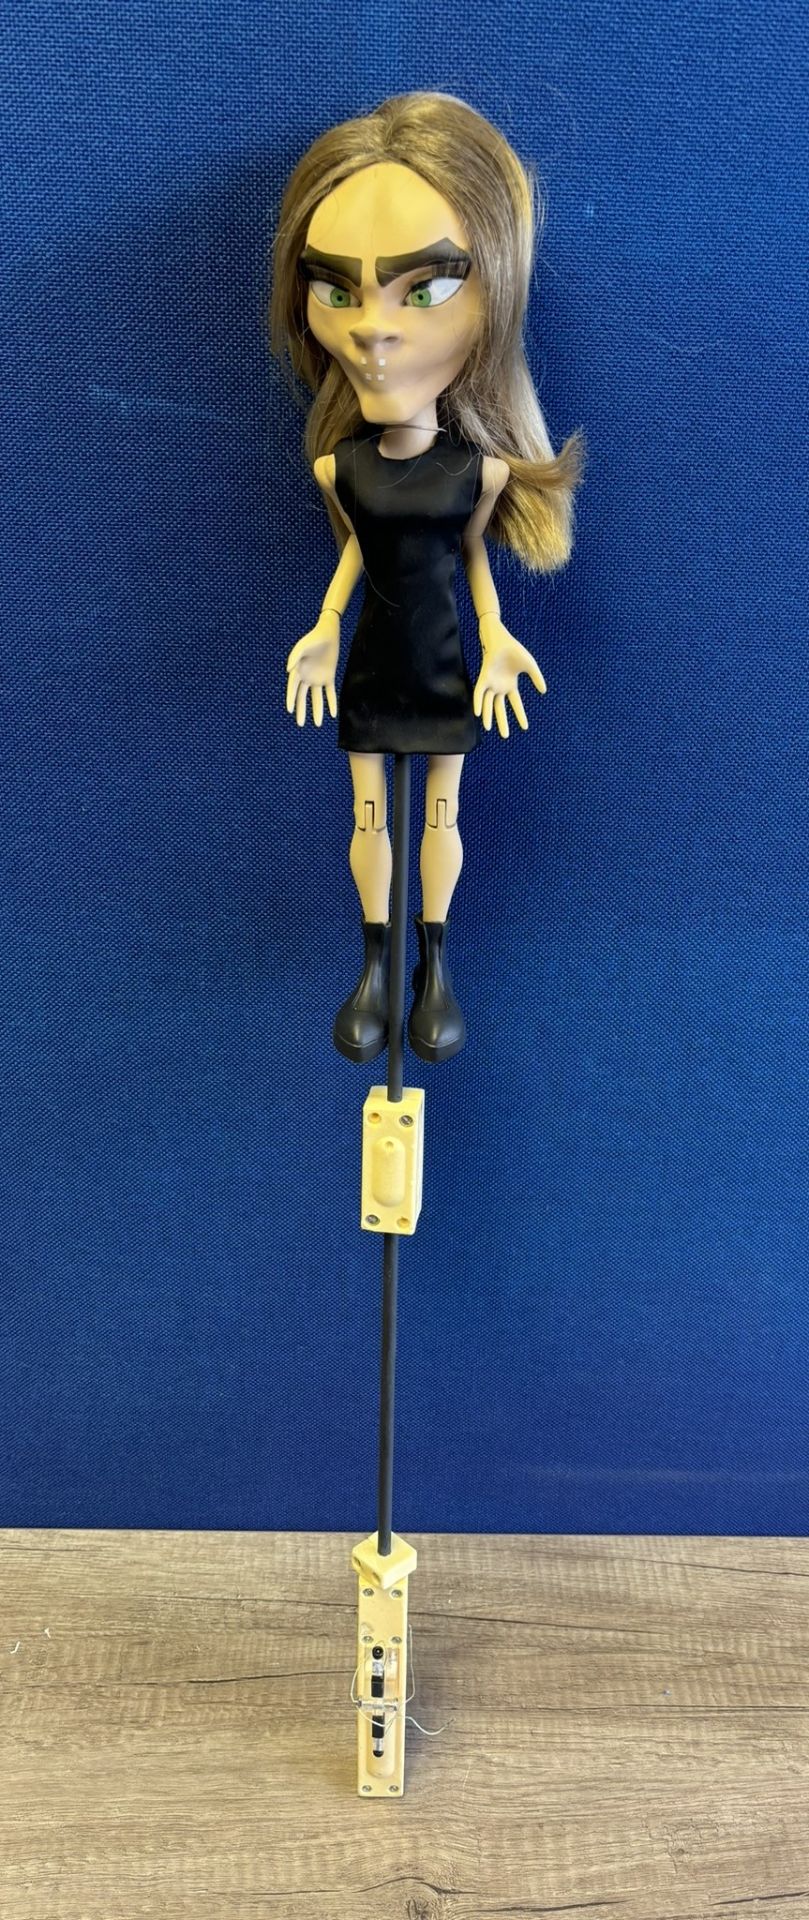 Newzoid puppet - Cara Delevingne - Image 3 of 3